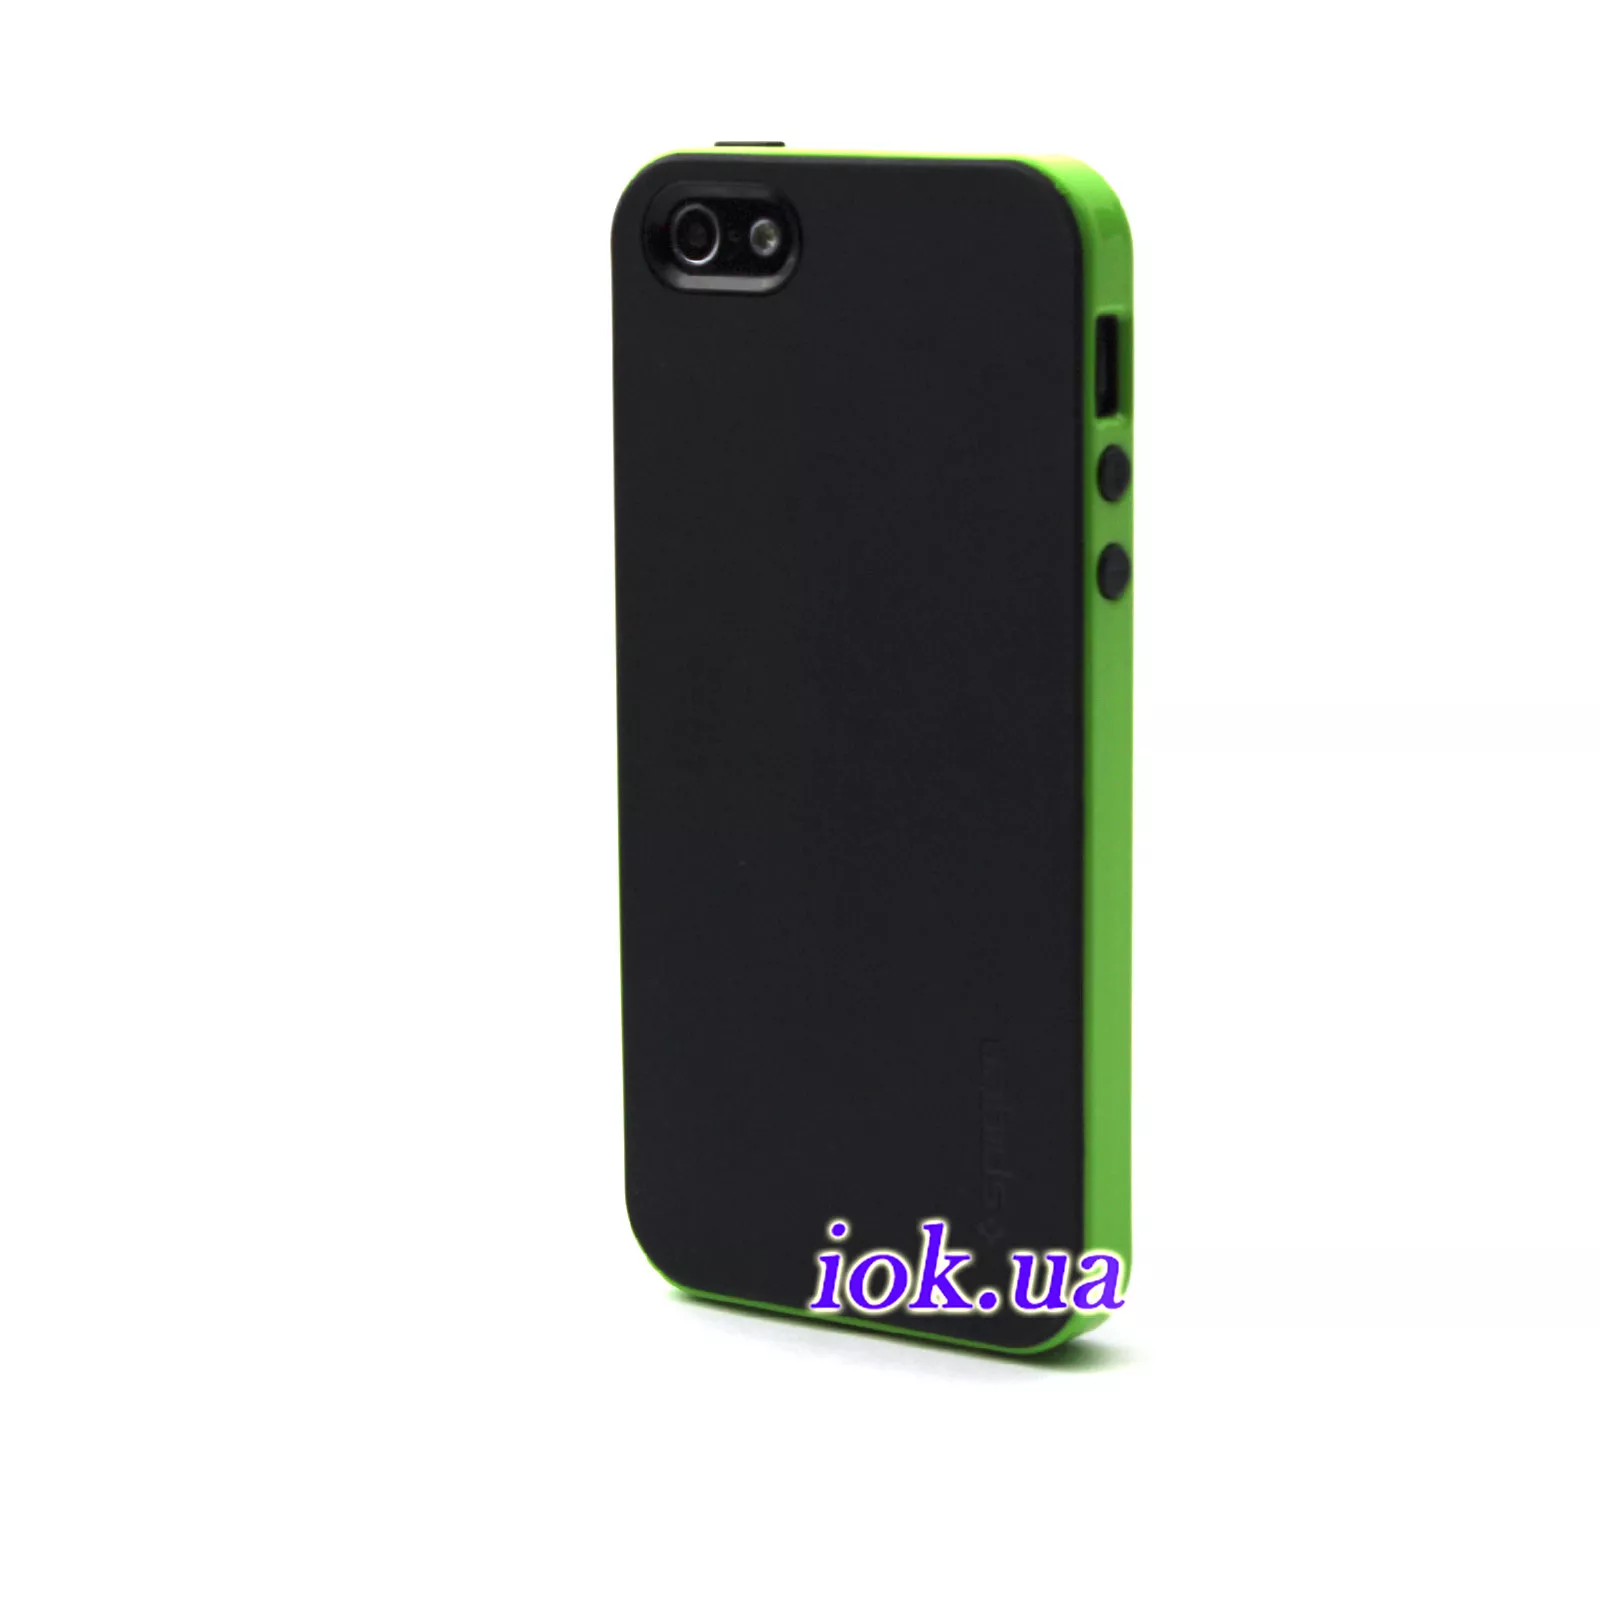 Чехол Spigen Neo Hybrid для iPhone 5/5S, зеленый